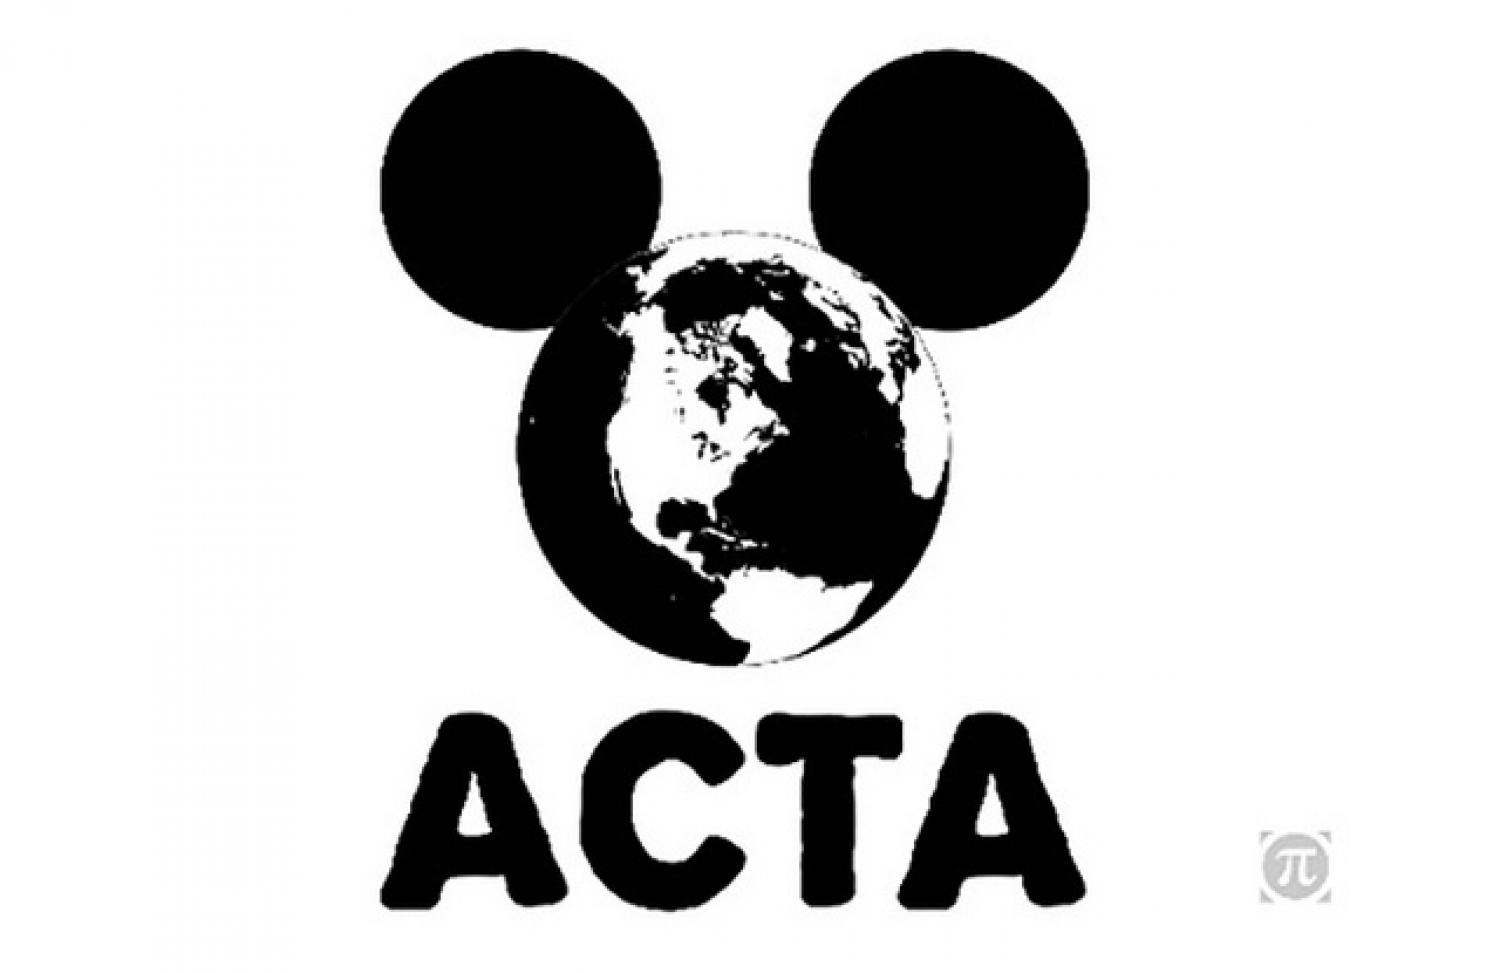 ACTA clarified for regular civilians